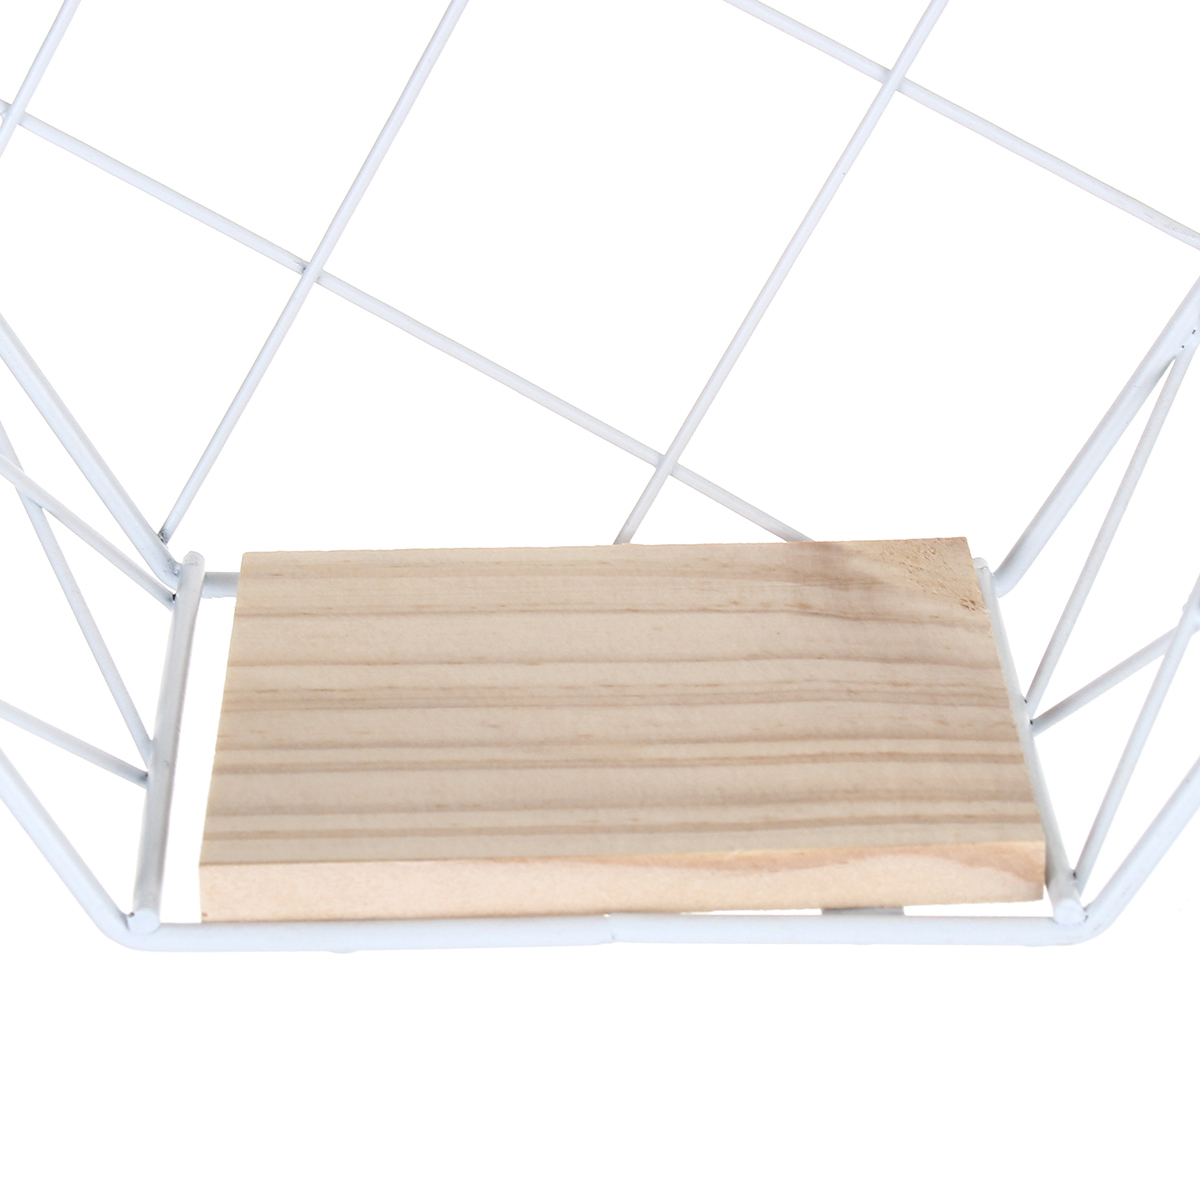 Geometric-Iron-Craft-Wall-Book-Shelf-Rack-Storage-Industrial-Style-Home-Decorations-1376059-9